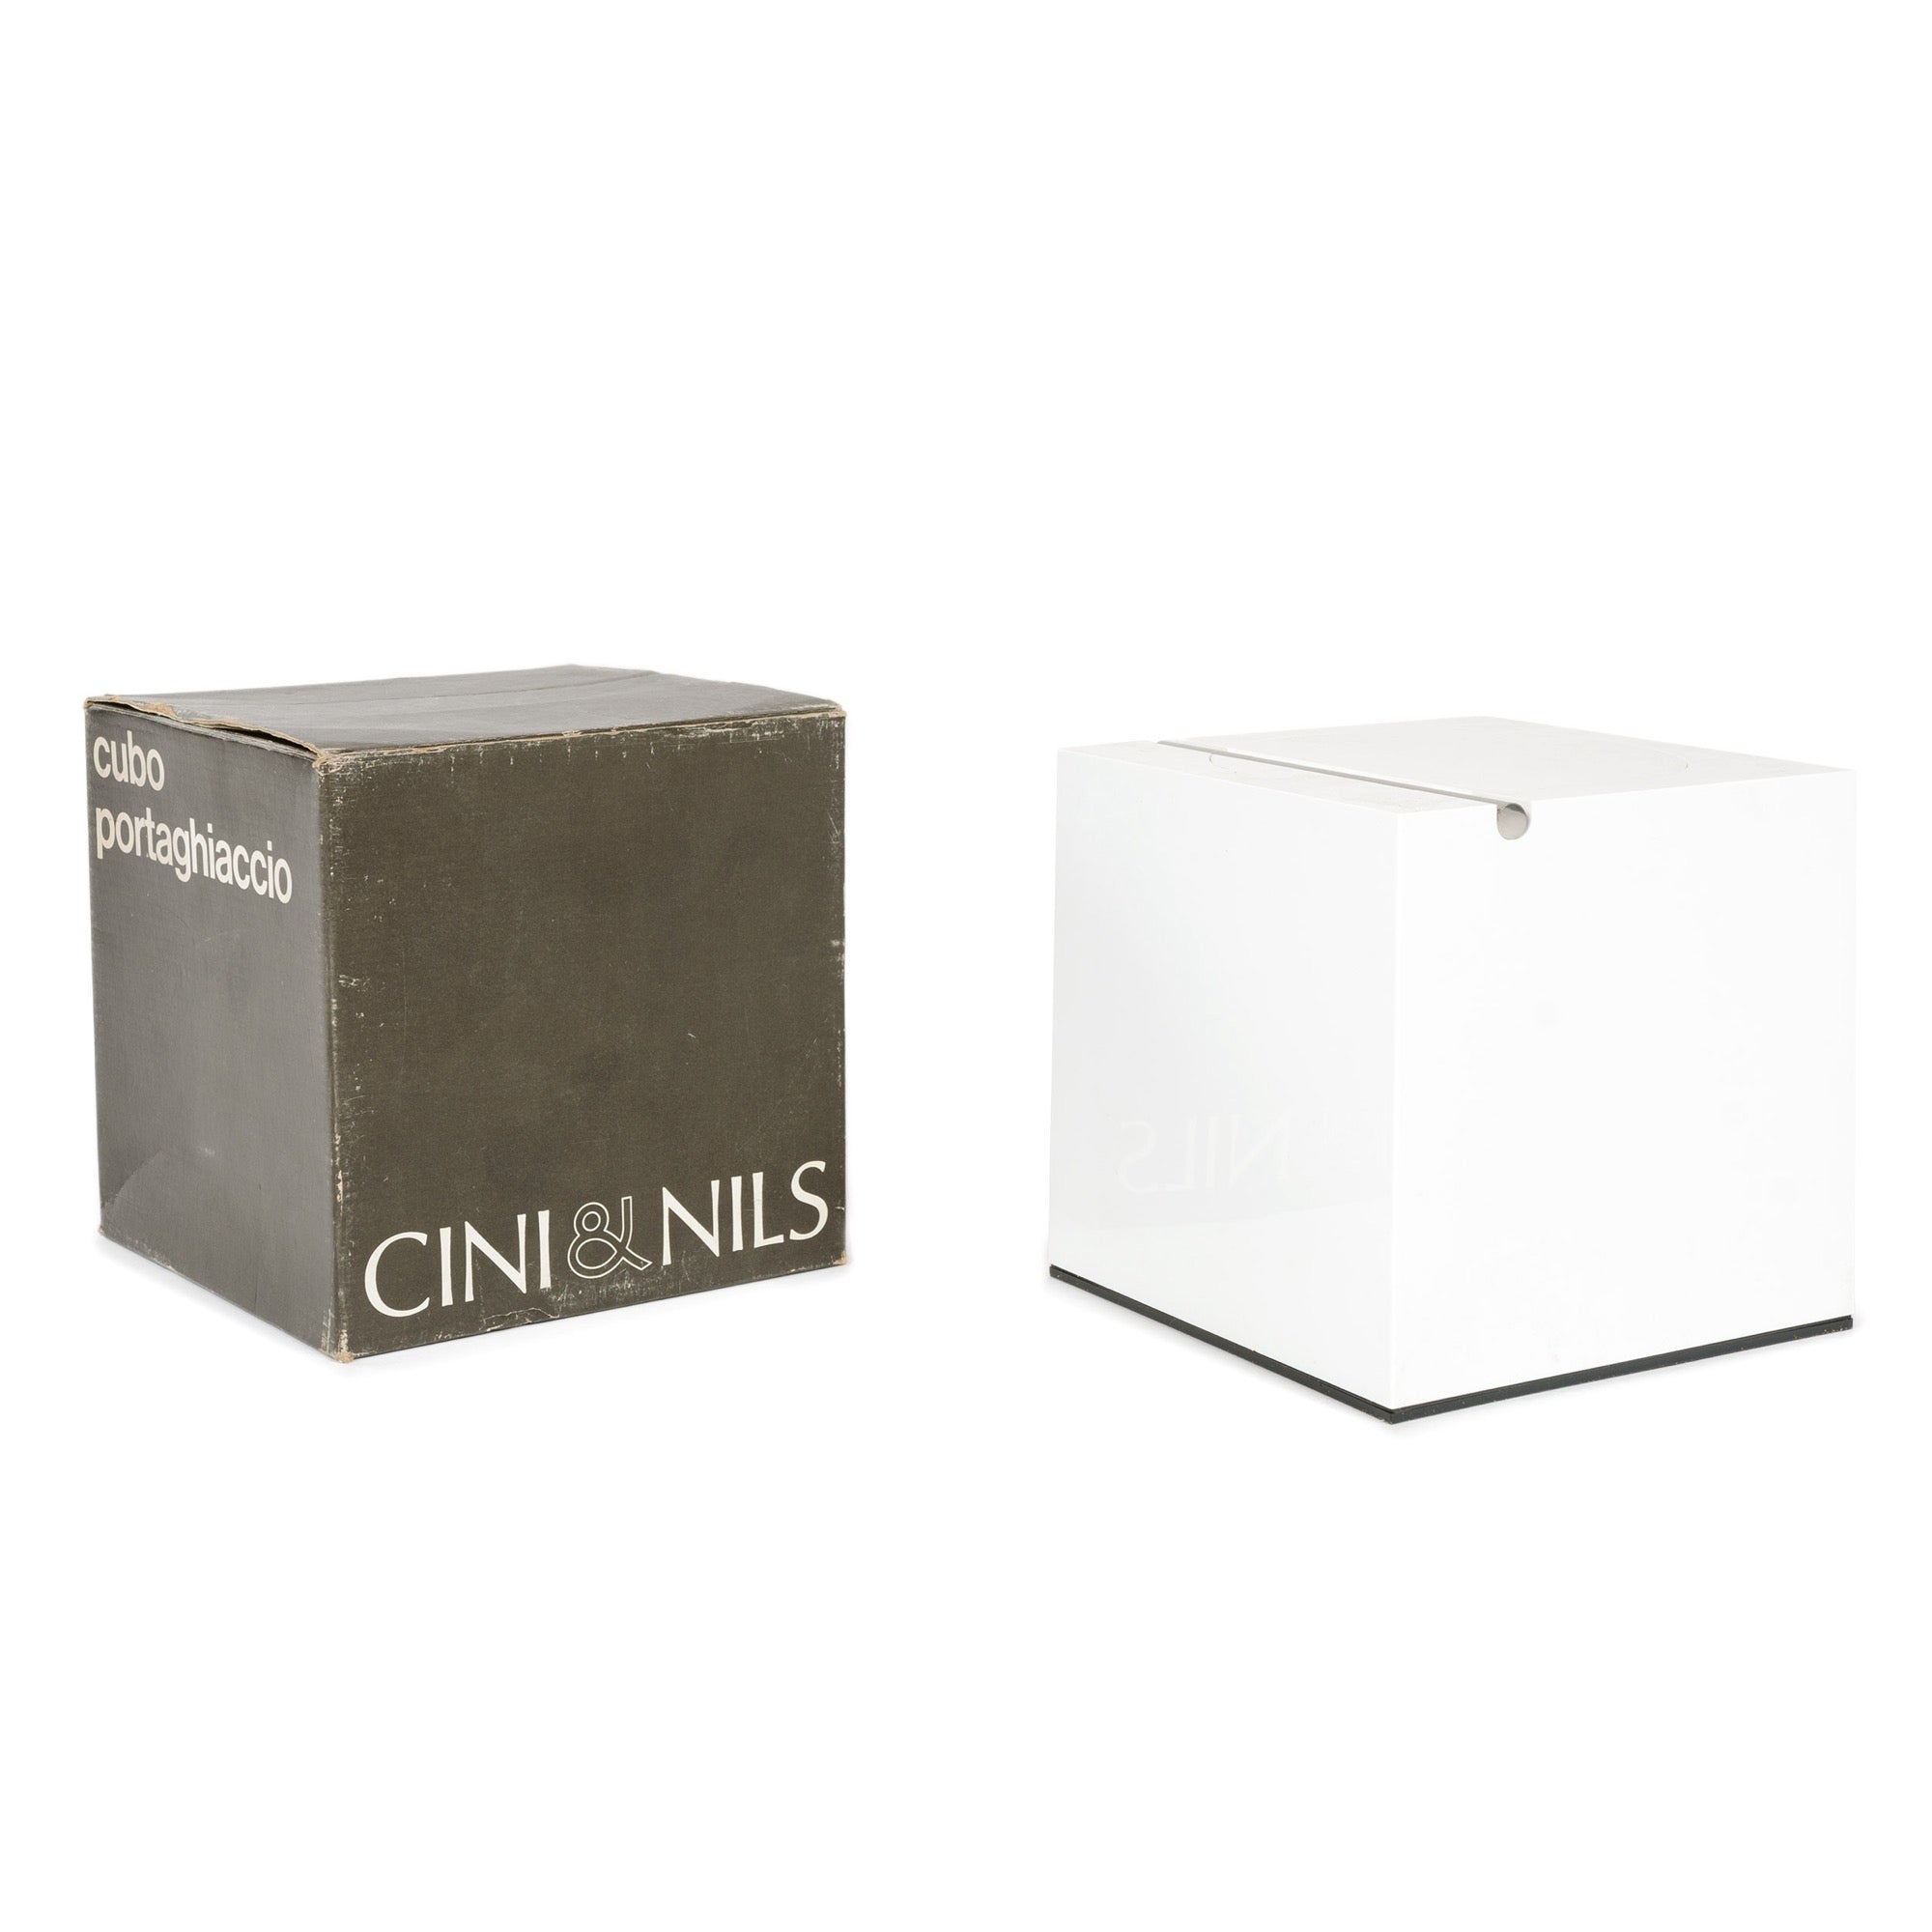 Acrylic Ice Bucket by OPI Milano for Cini & Nils